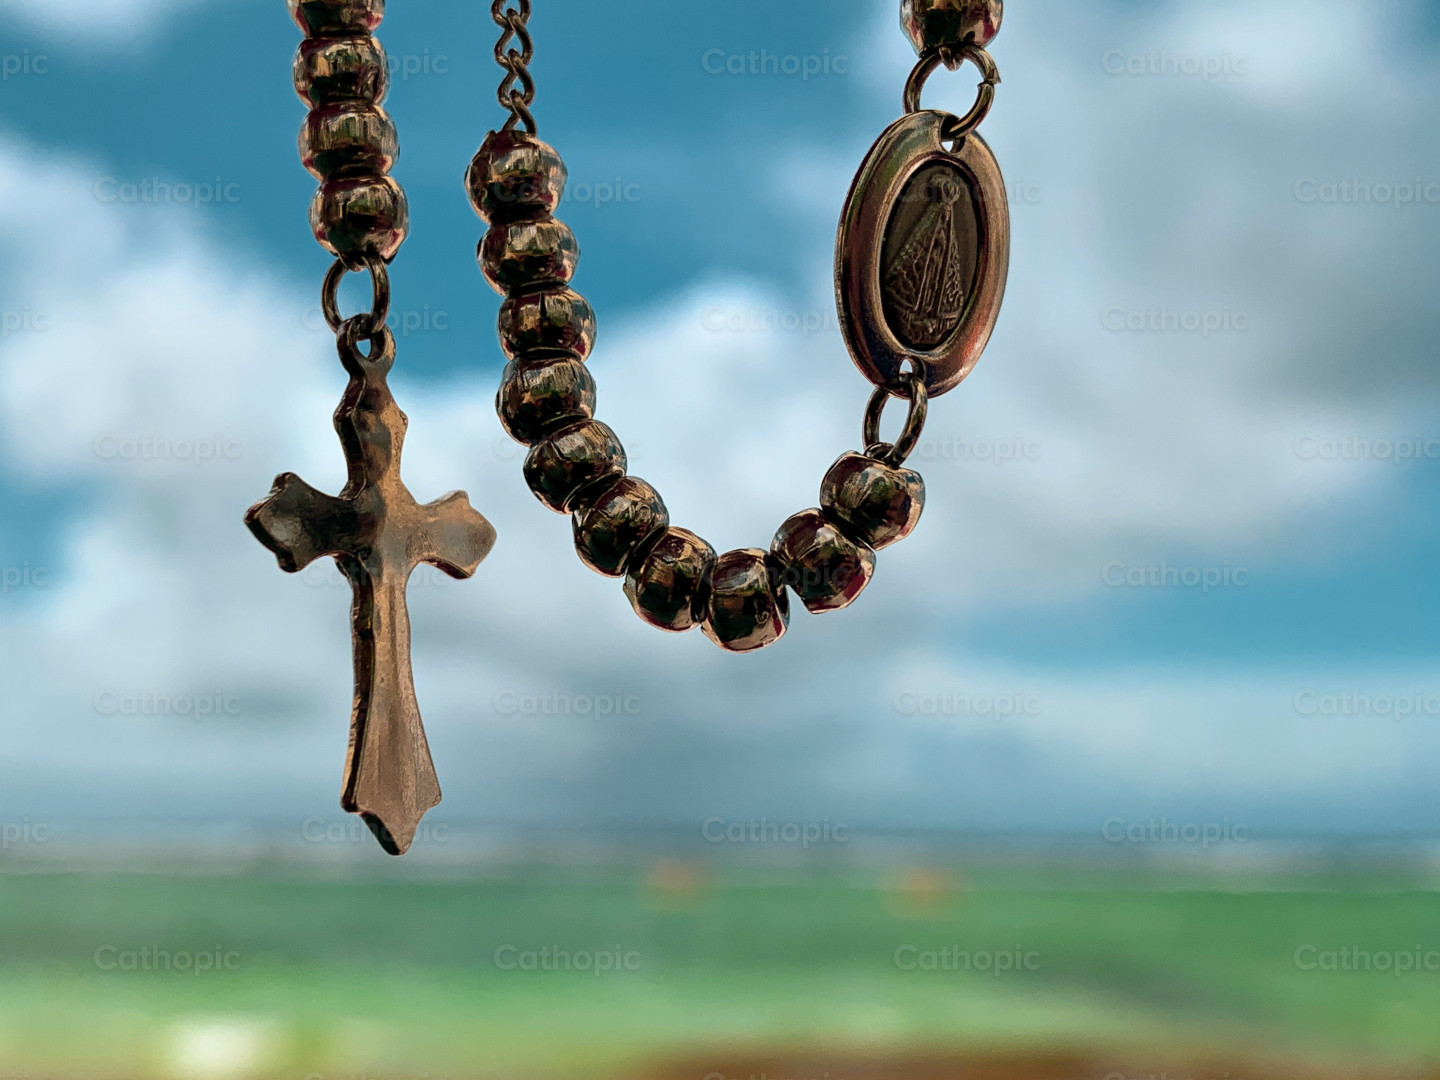 Rosary photo - Cathopic